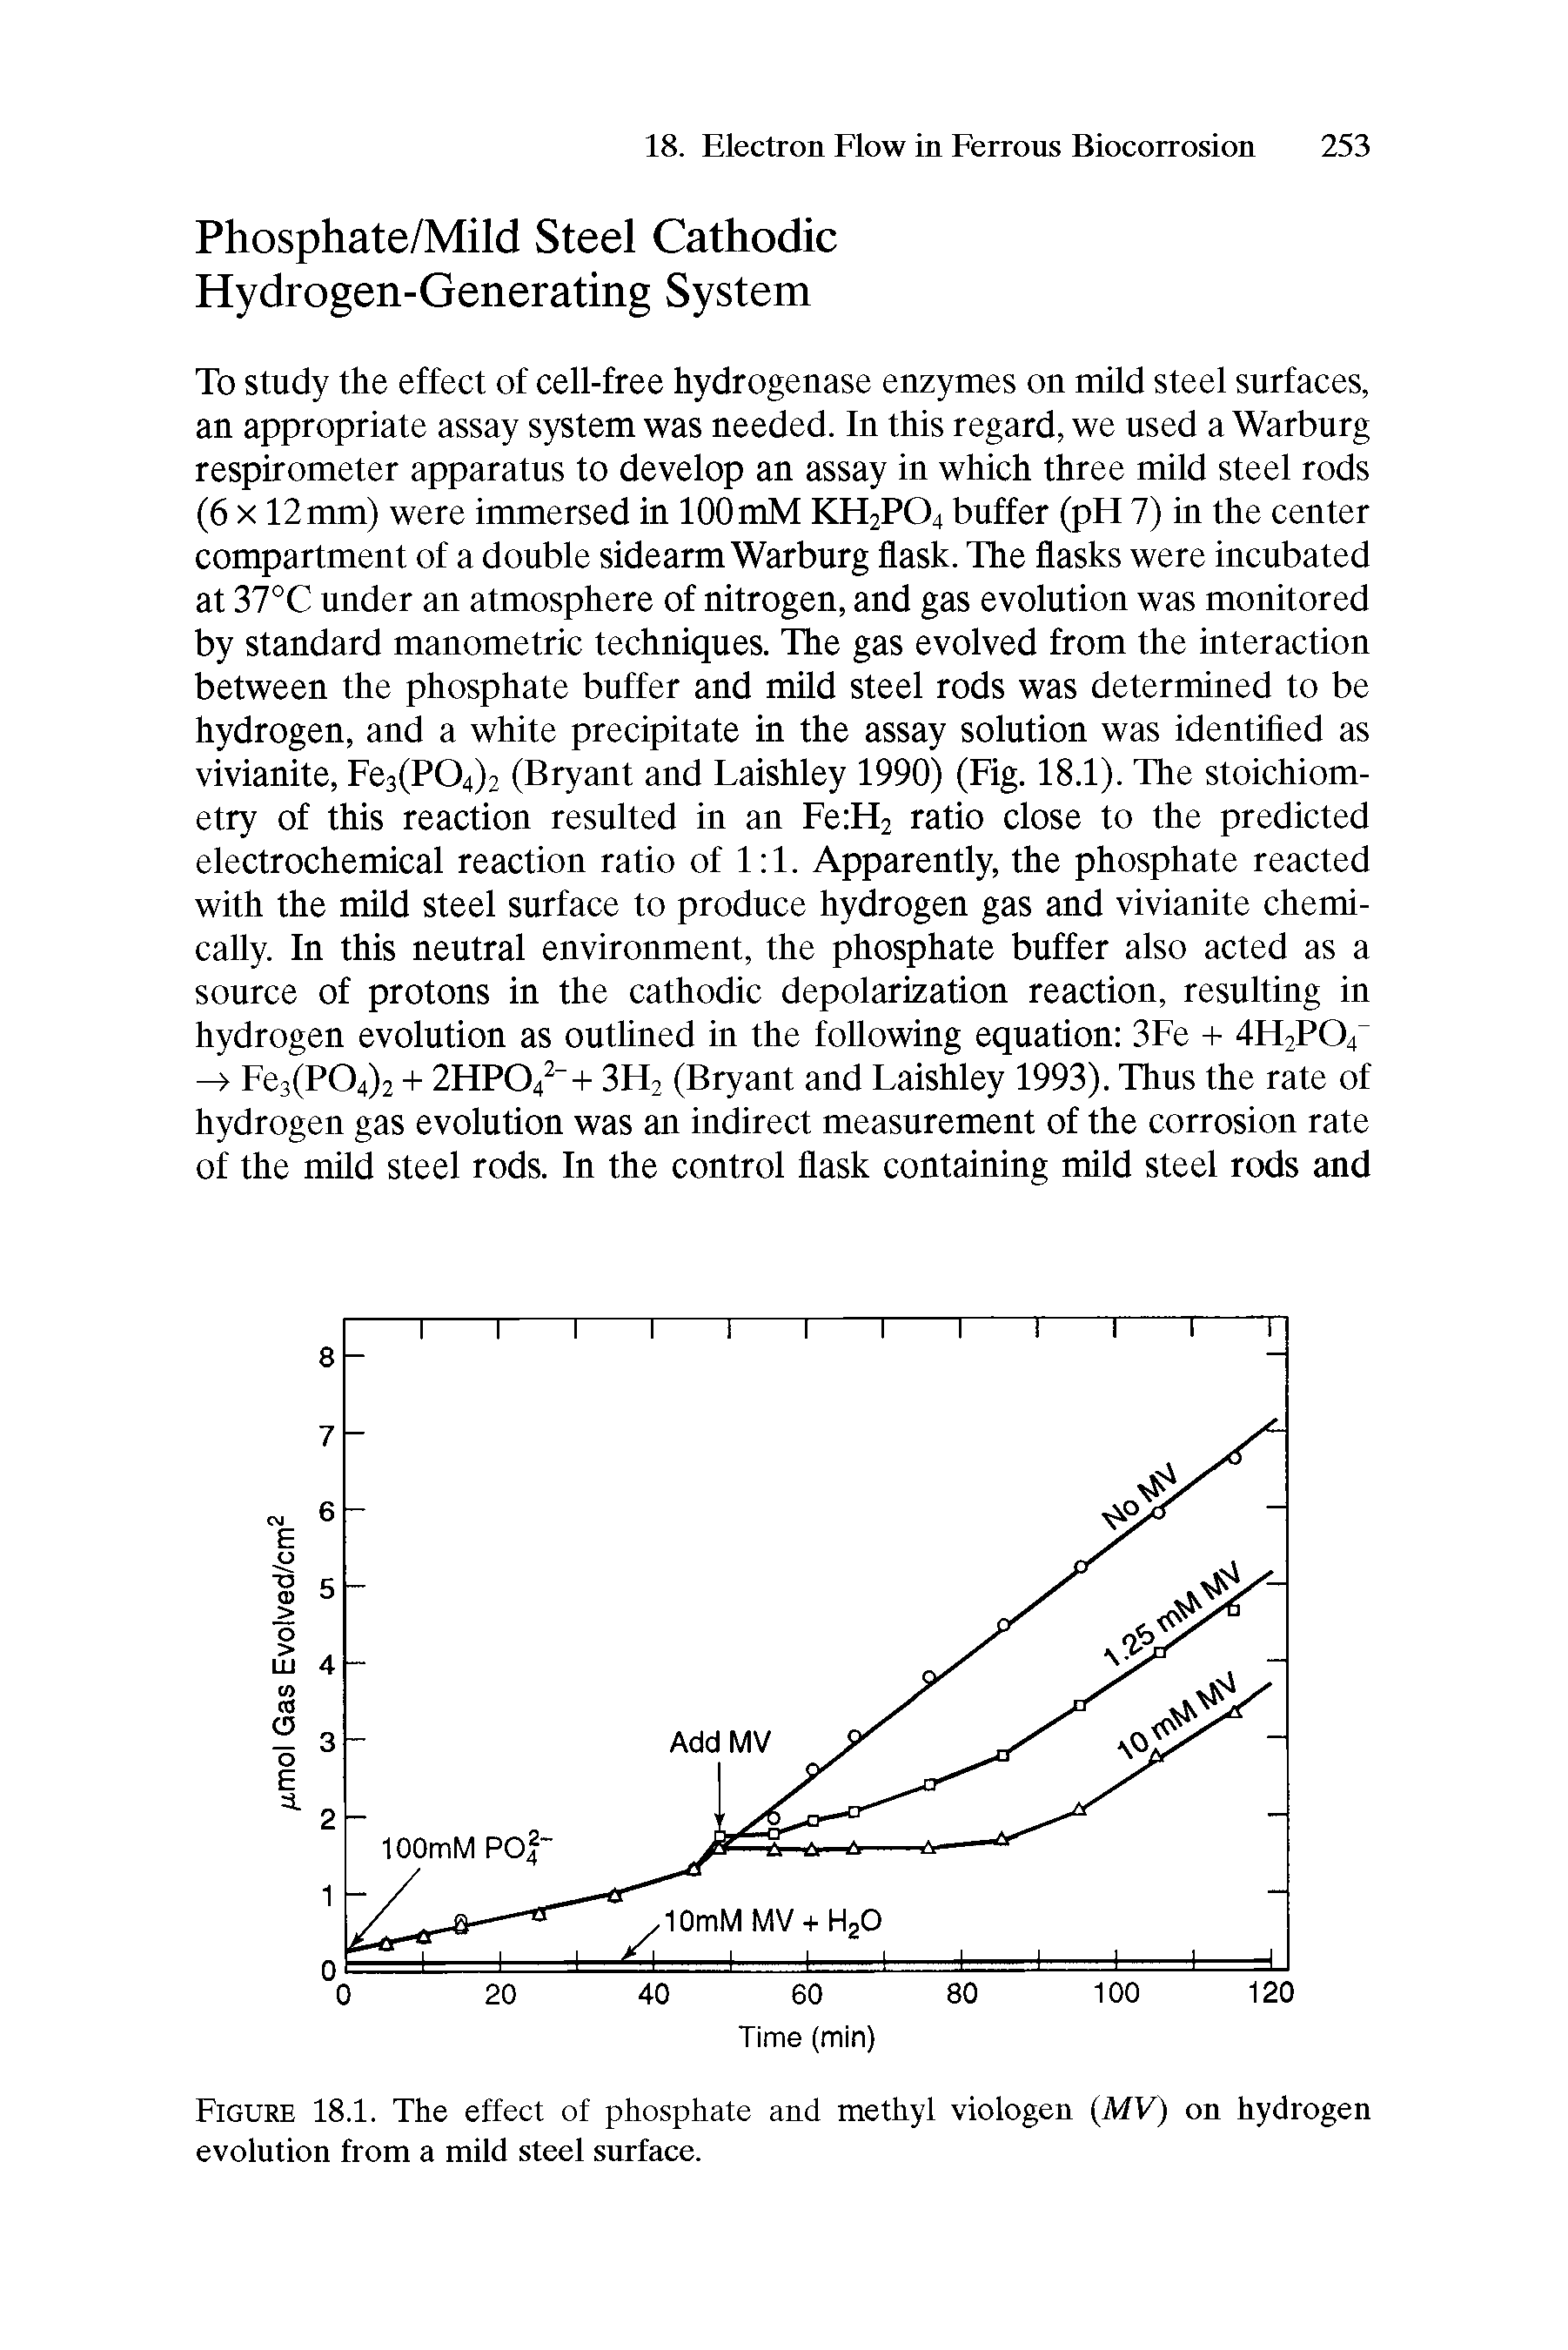 Figure 18.1. The effect of phosphate and methyl viologen MV) on hydrogen evolution from a mild steel surface.